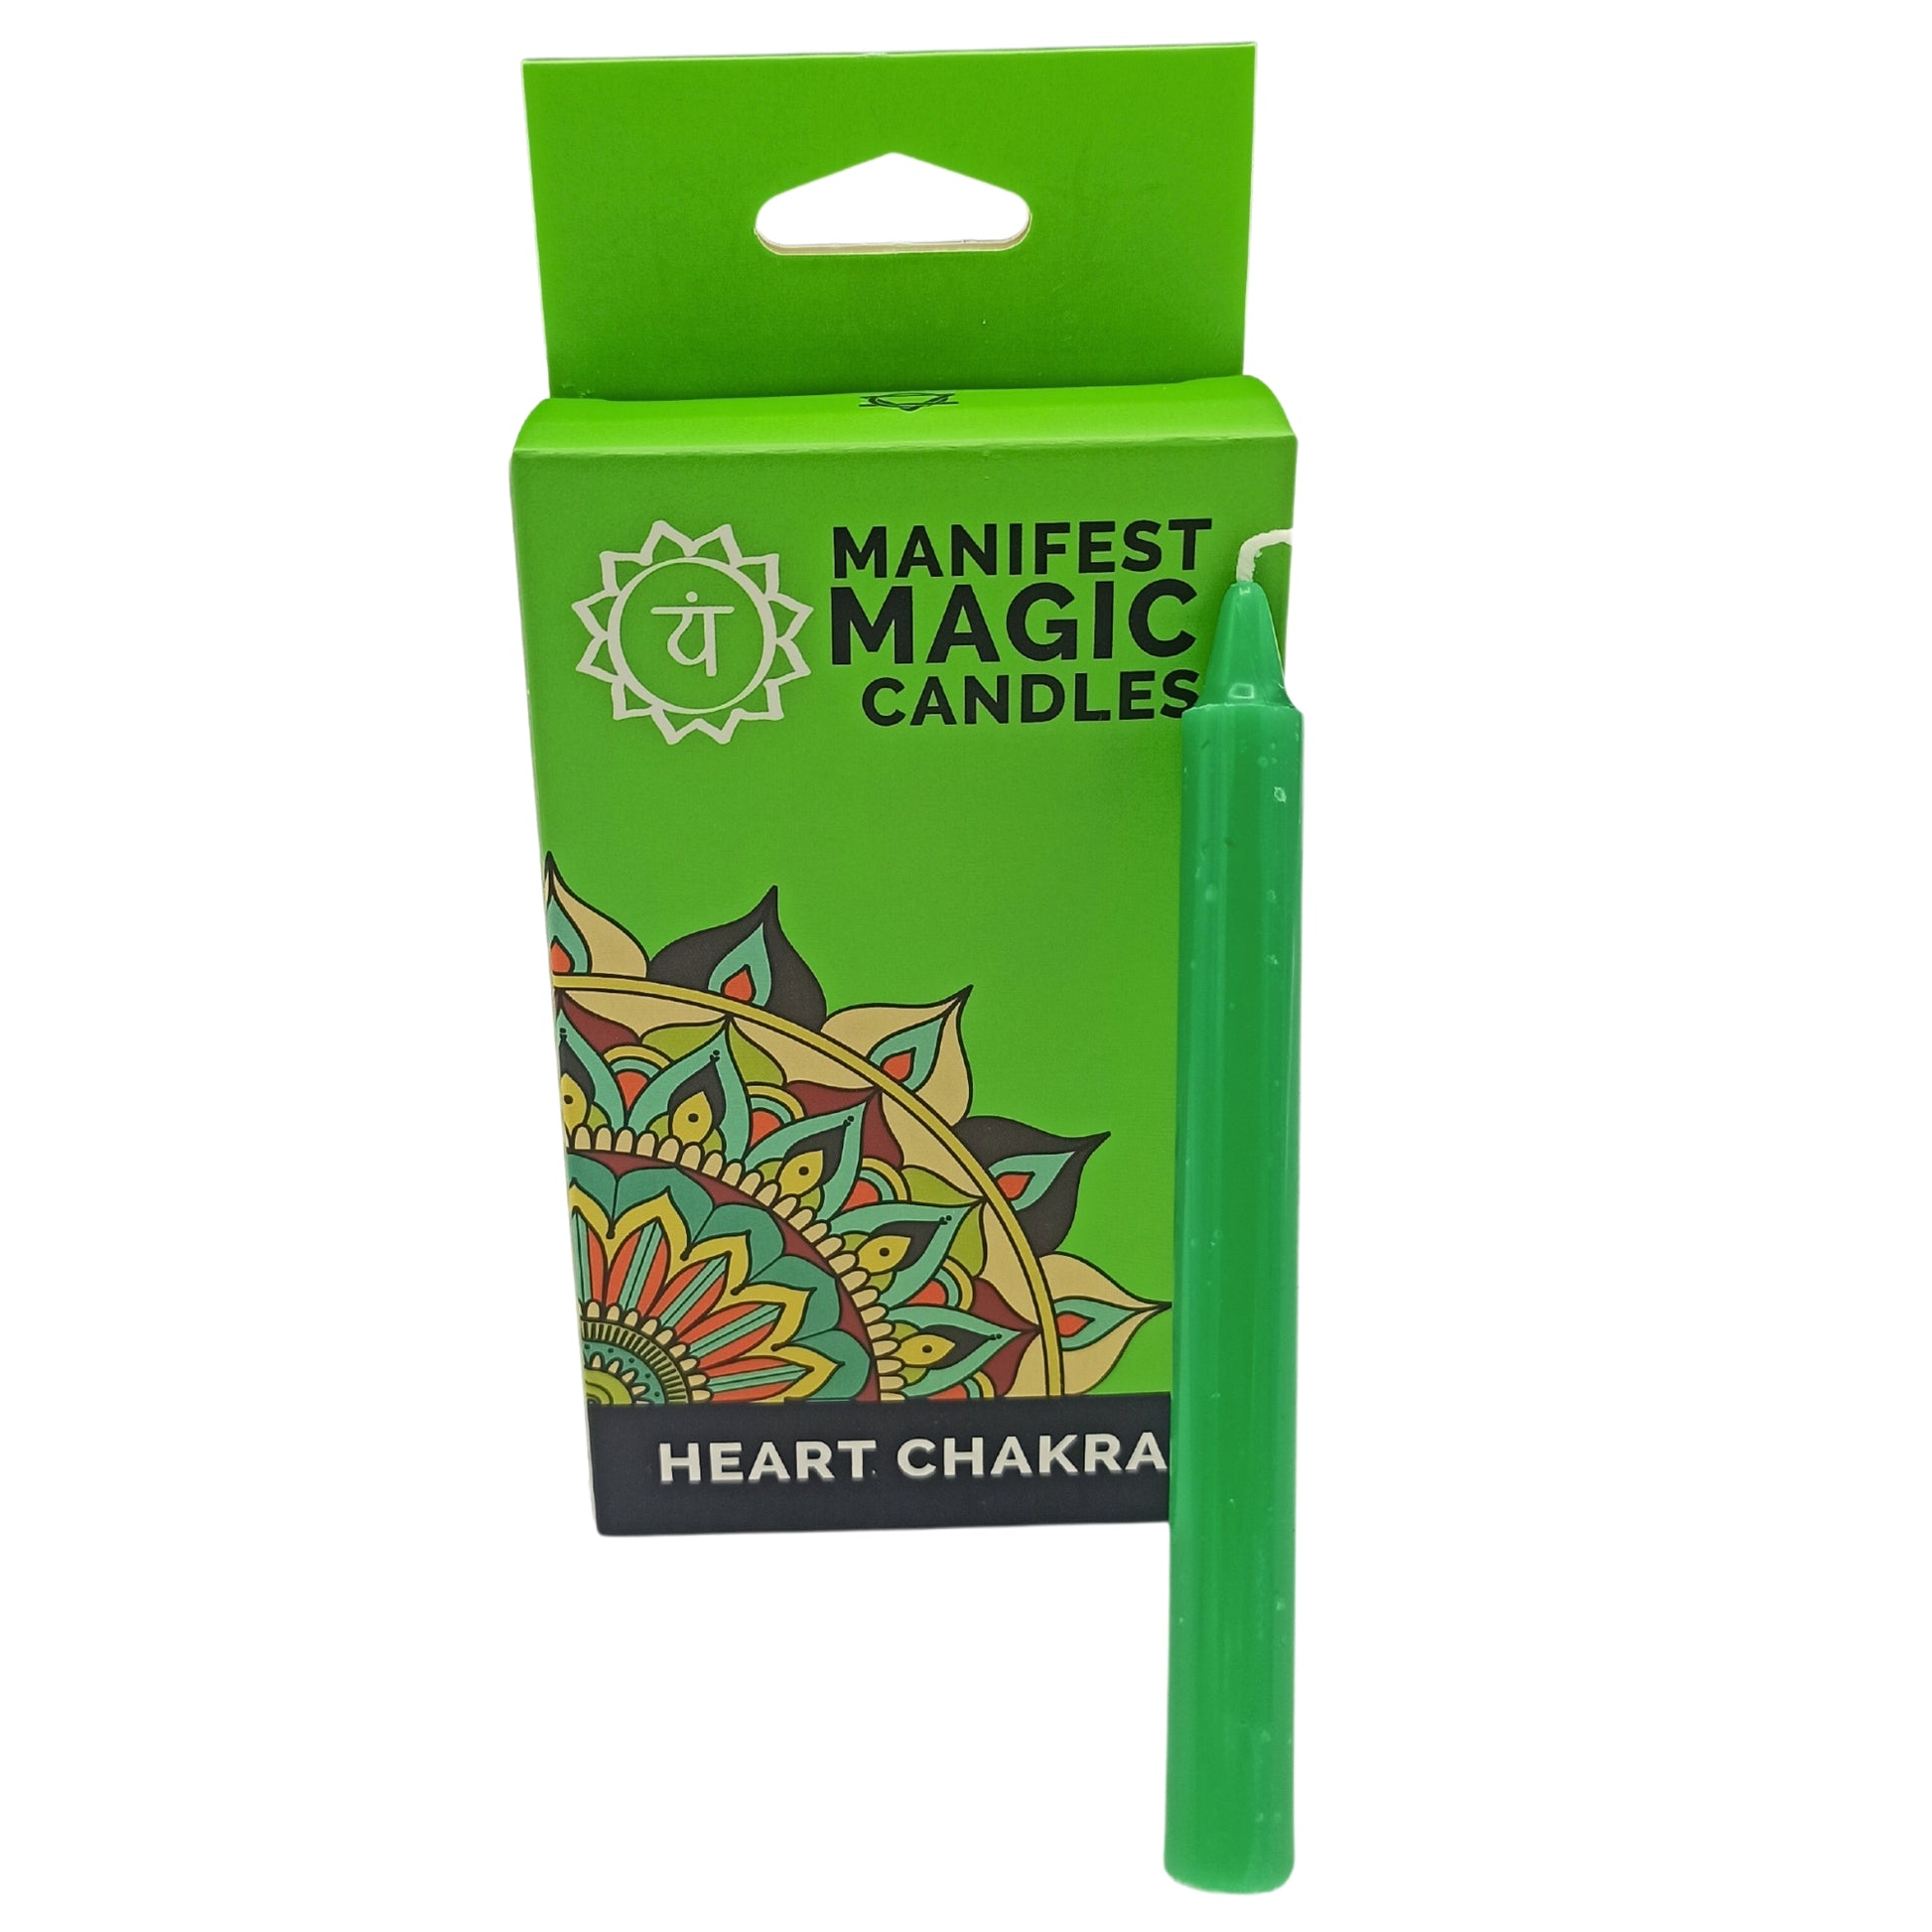 Manifest Magic Candles (pack of 12) - Green - Heart Chakra - Kaftans direct